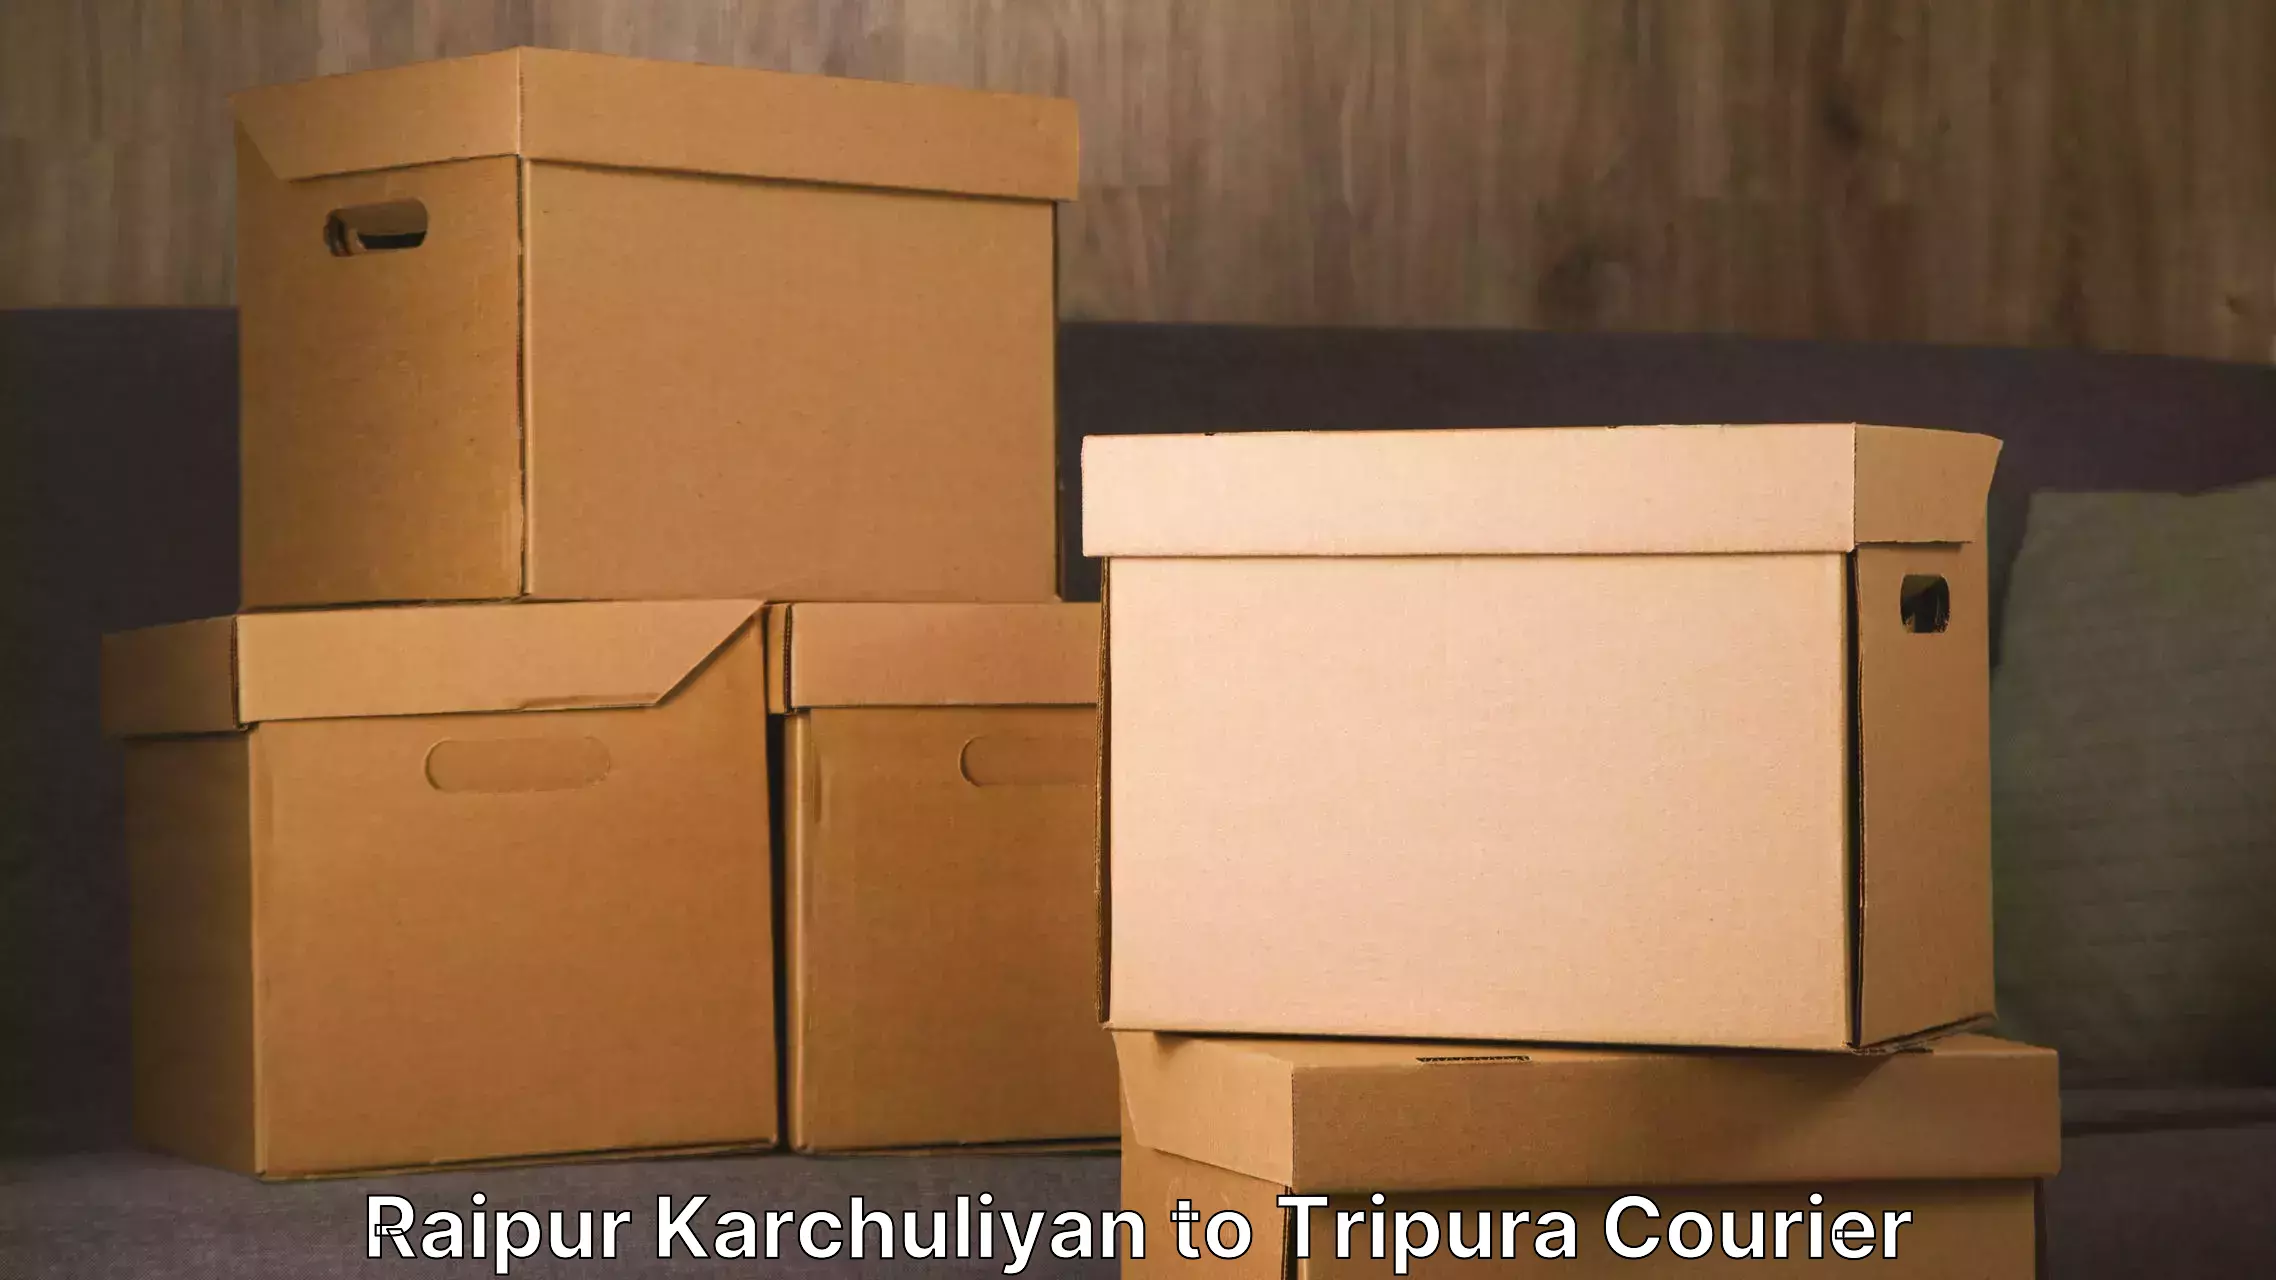 Professional moving company Raipur Karchuliyan to Tripura